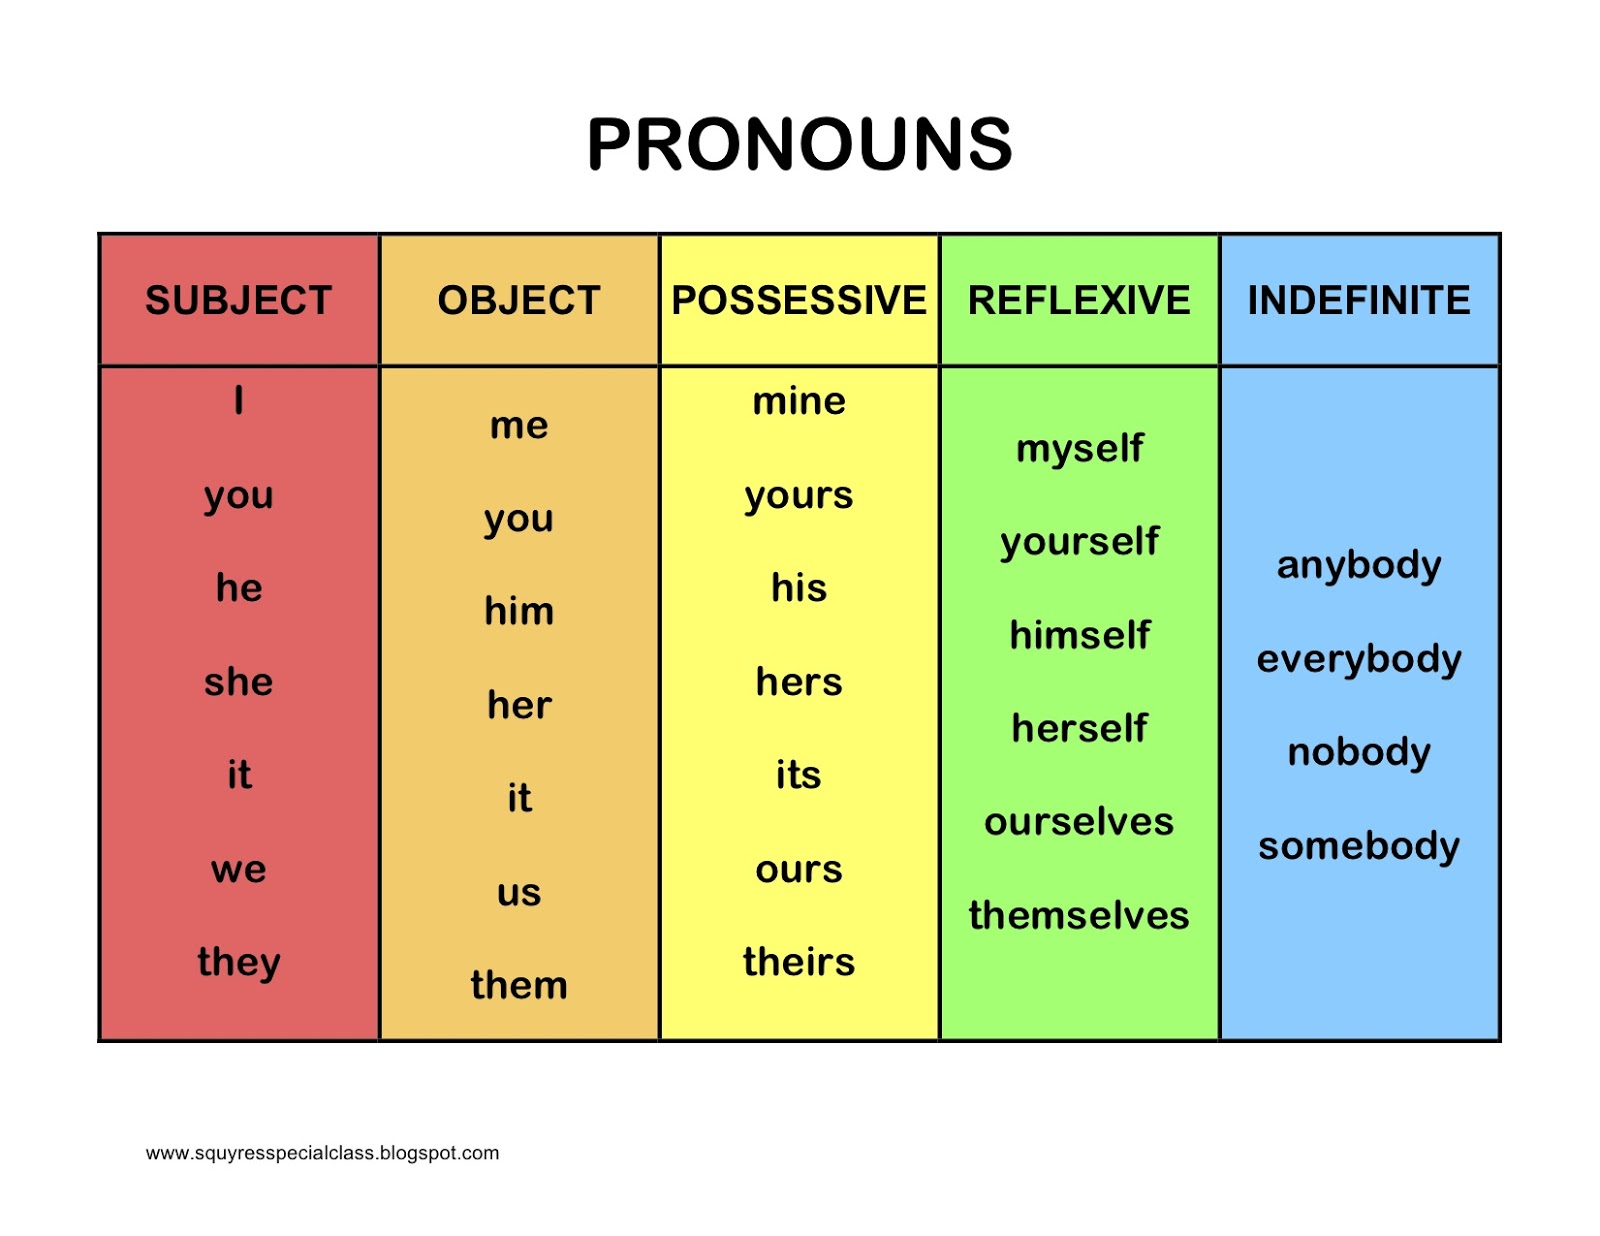 nouns-in-the-subject-worksheet-nouns-worksheet-regular-nouns-teaching-nouns